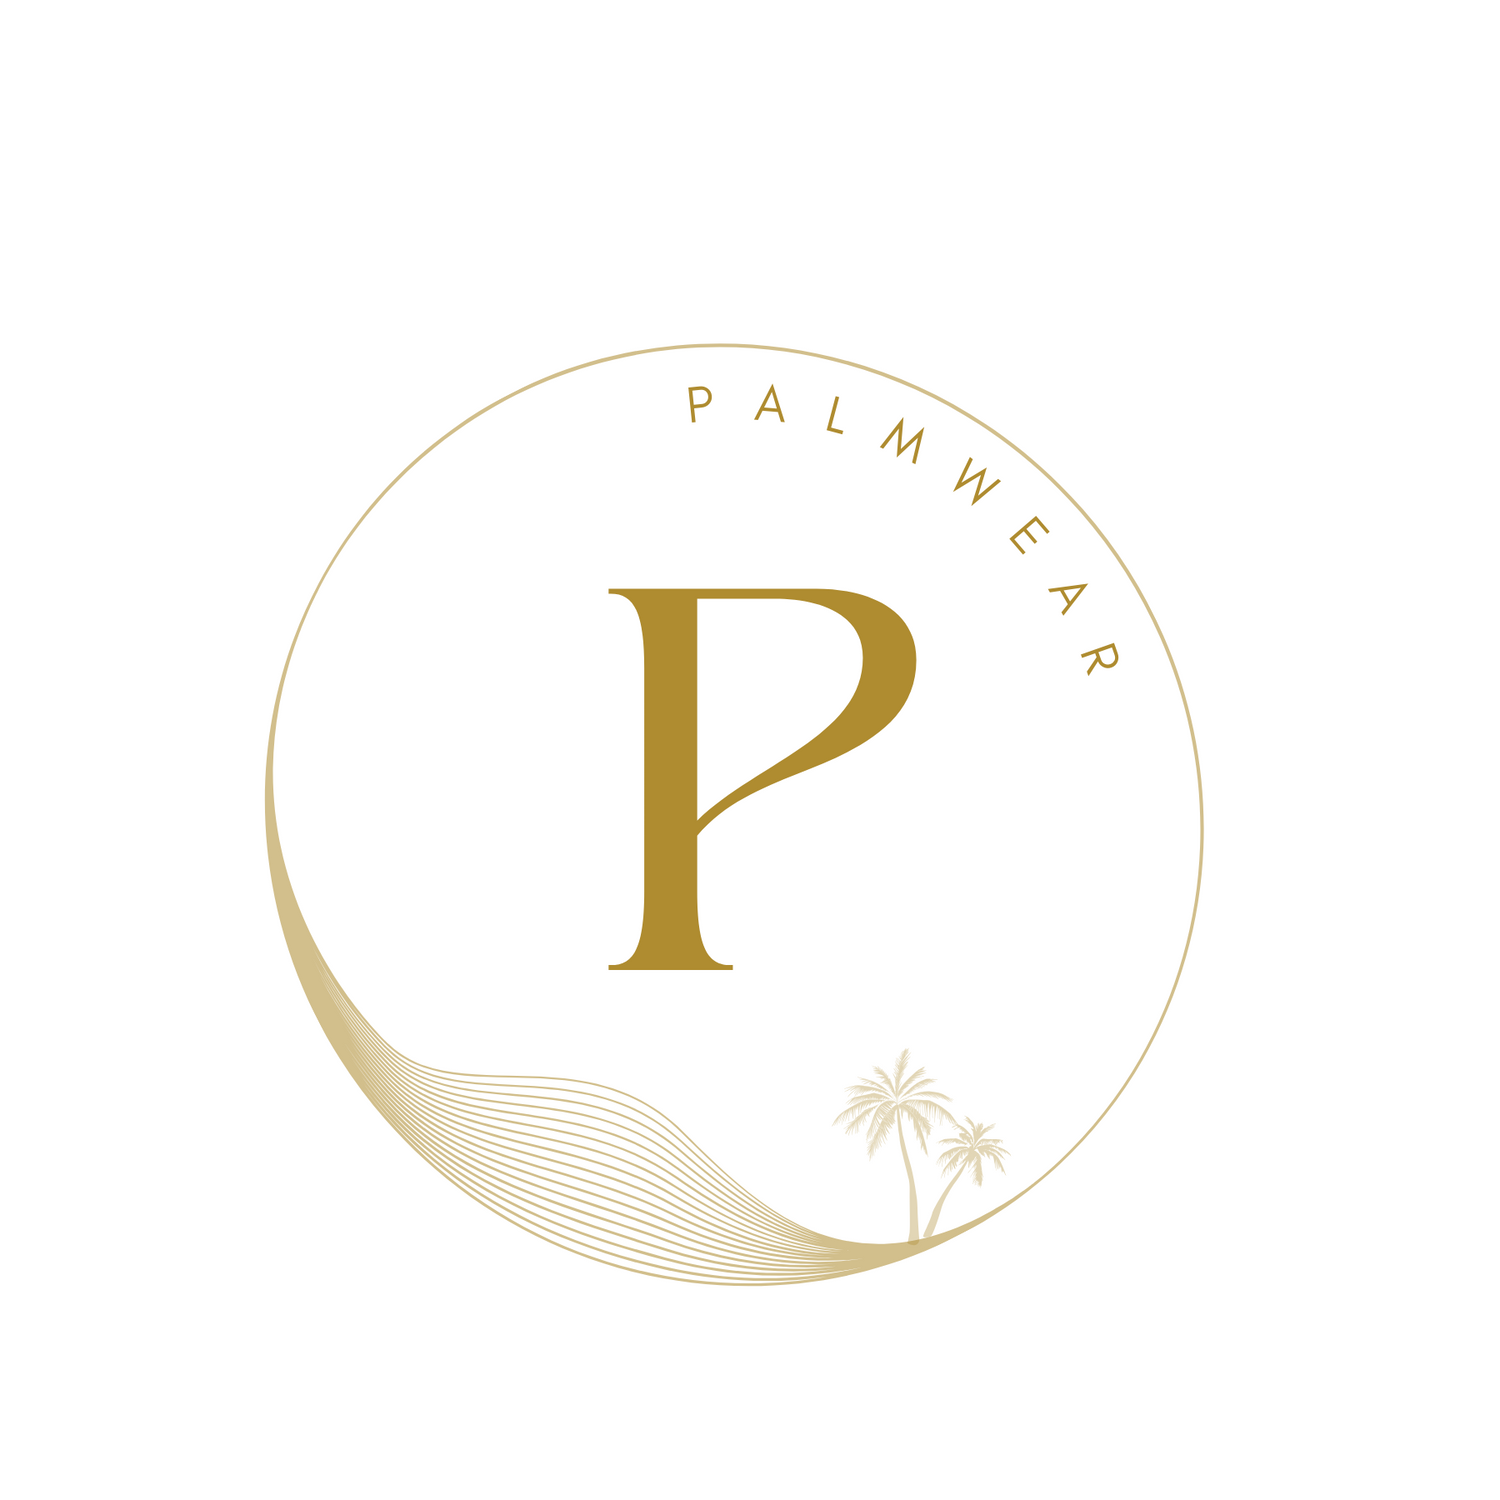 Palmwear Brand